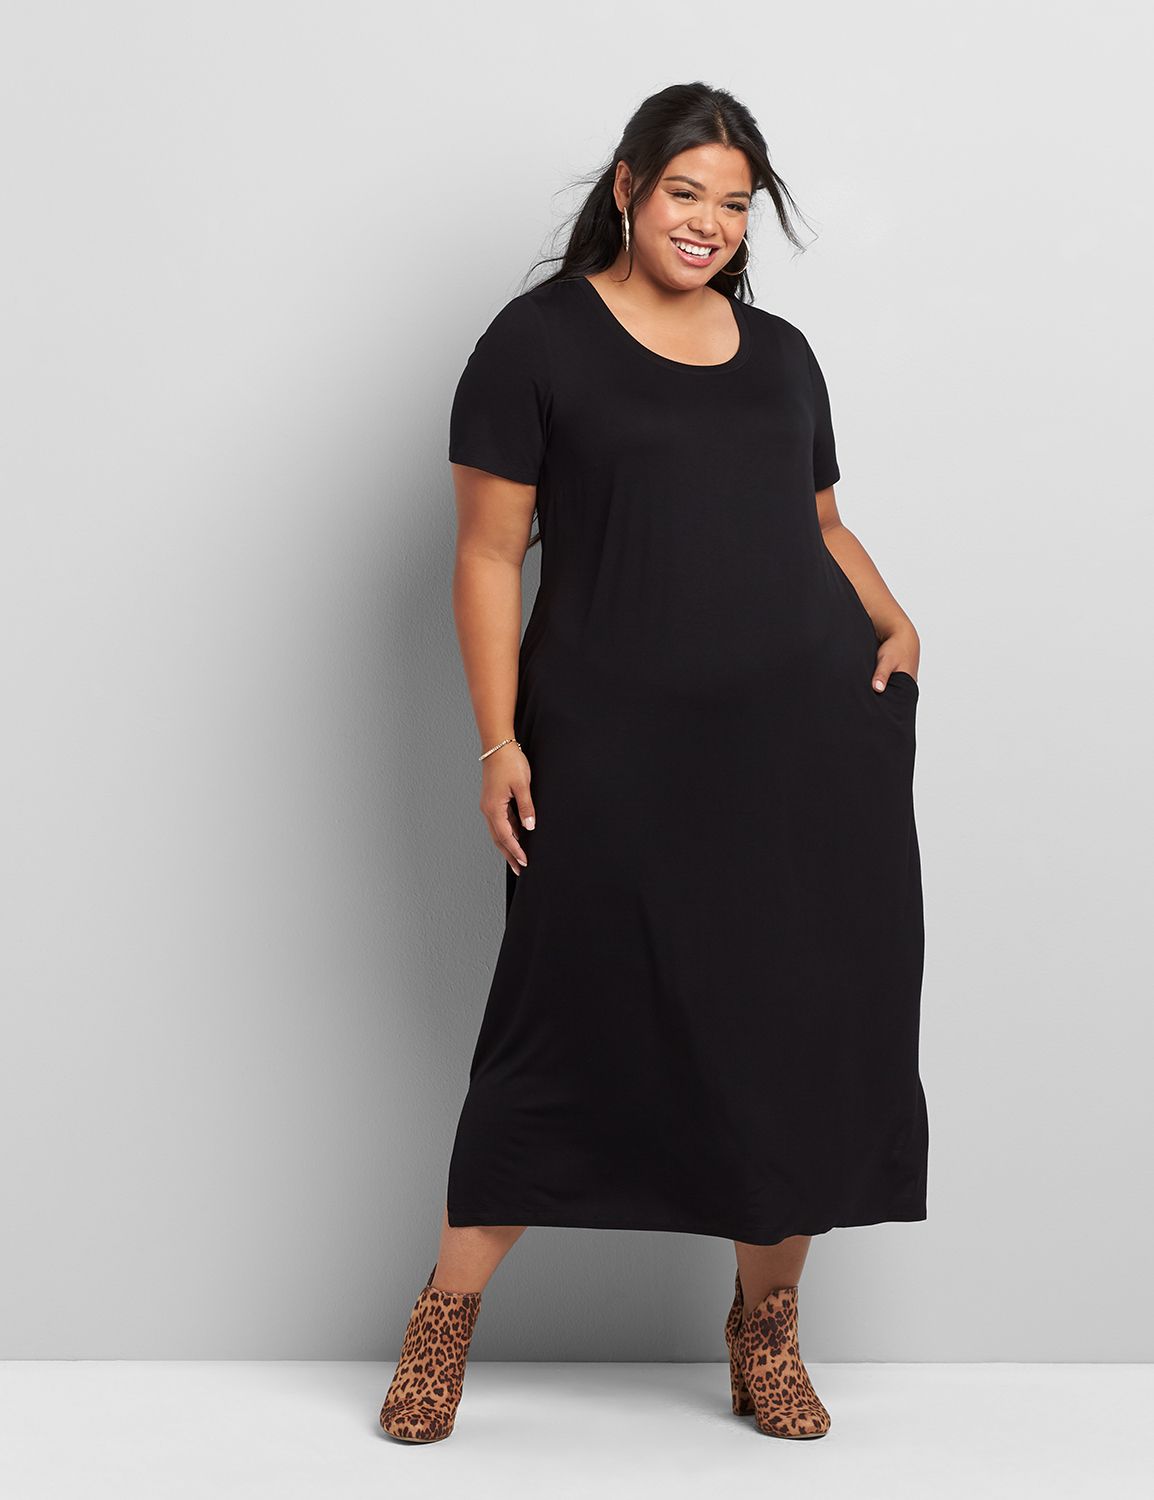 black dress size 26